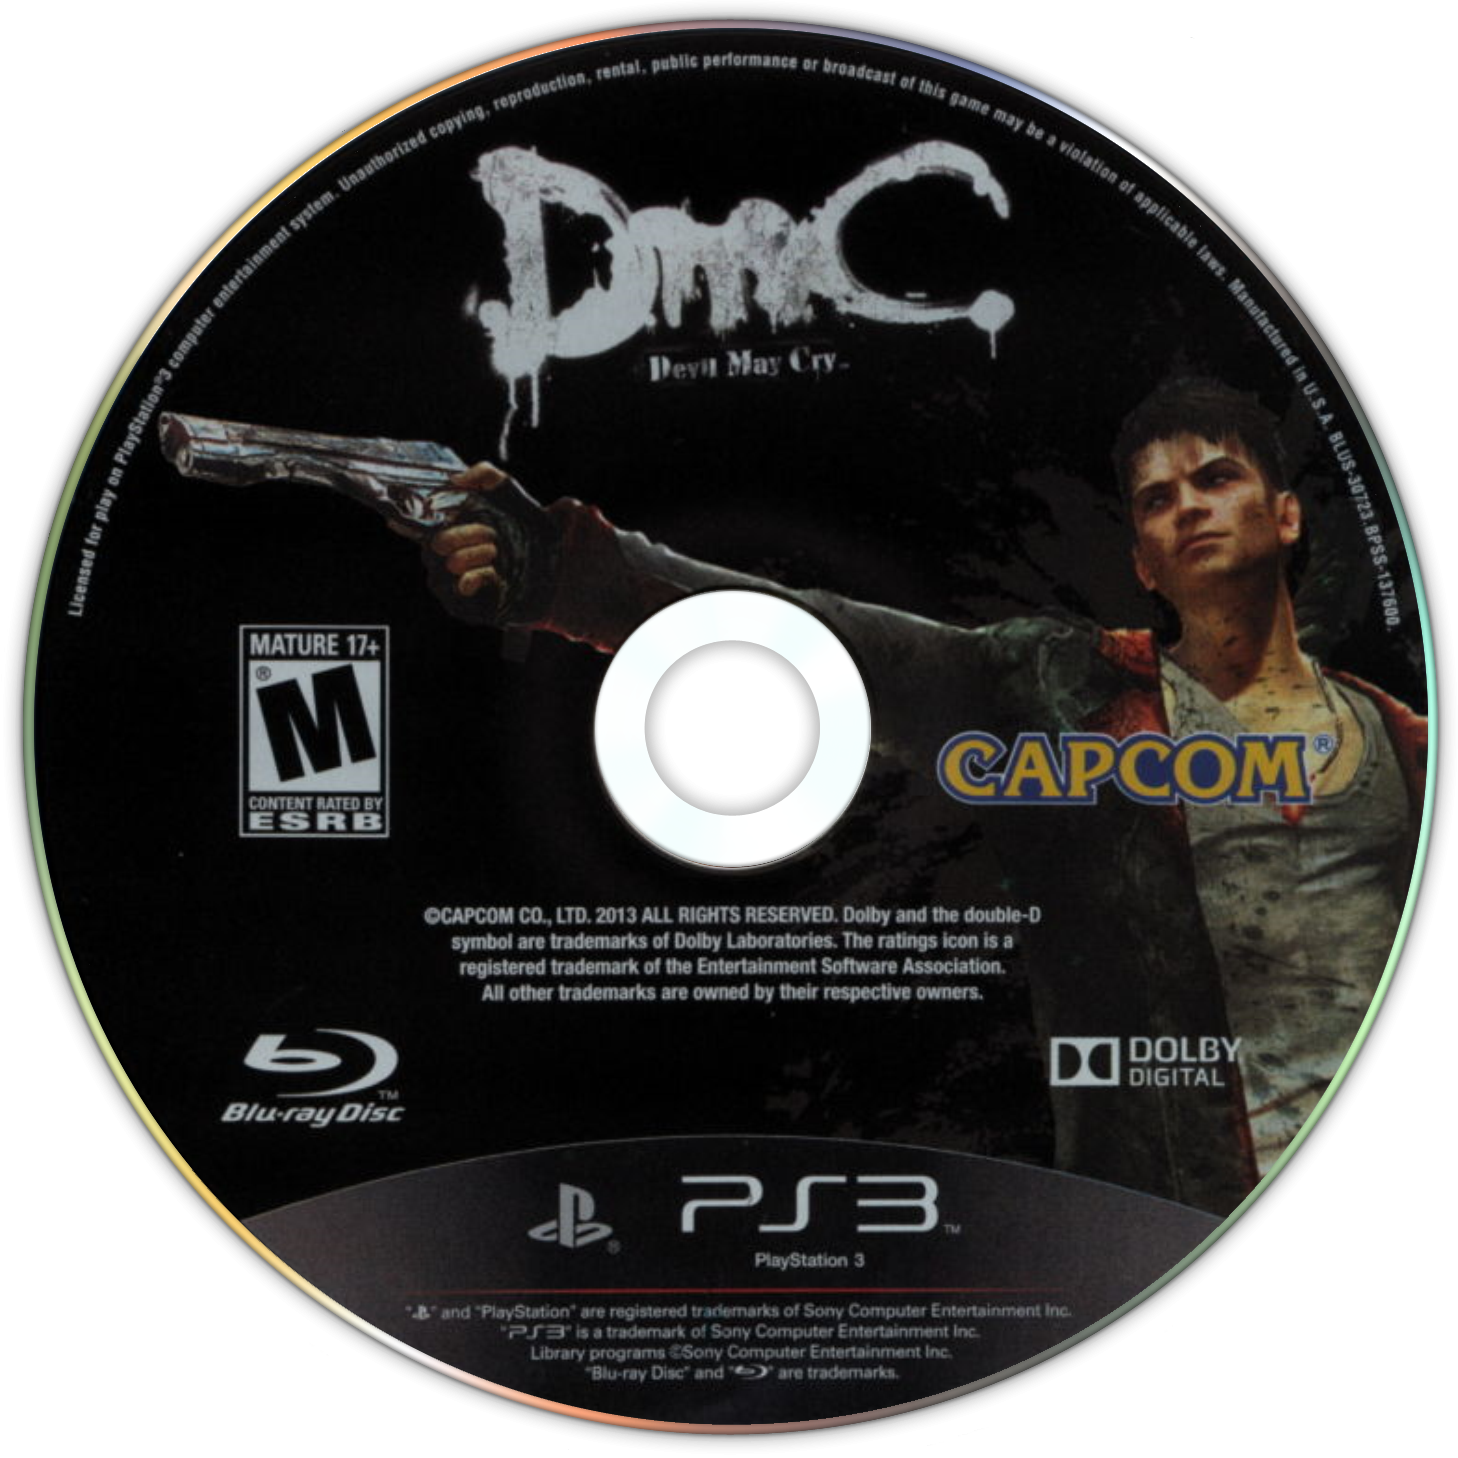 DmC: Devil May Cry - PlayStation 3 (PS3) Game